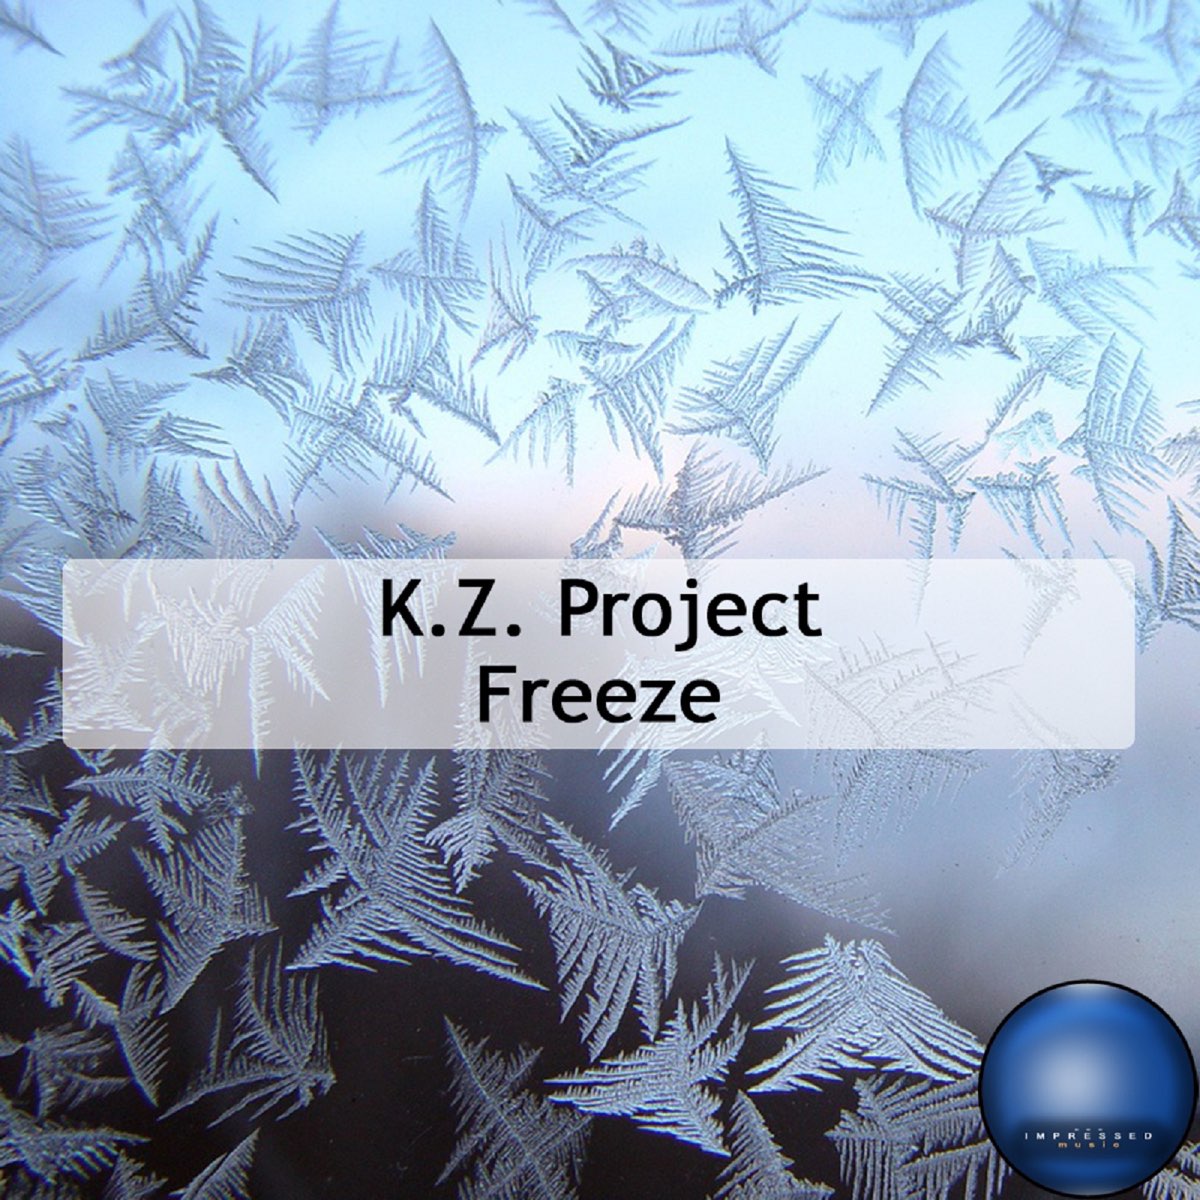 Freeze.Project. Freeze альбом песни. Альбом Freeze SKZ. Сингл Frozen (Fireboy DML Remix.